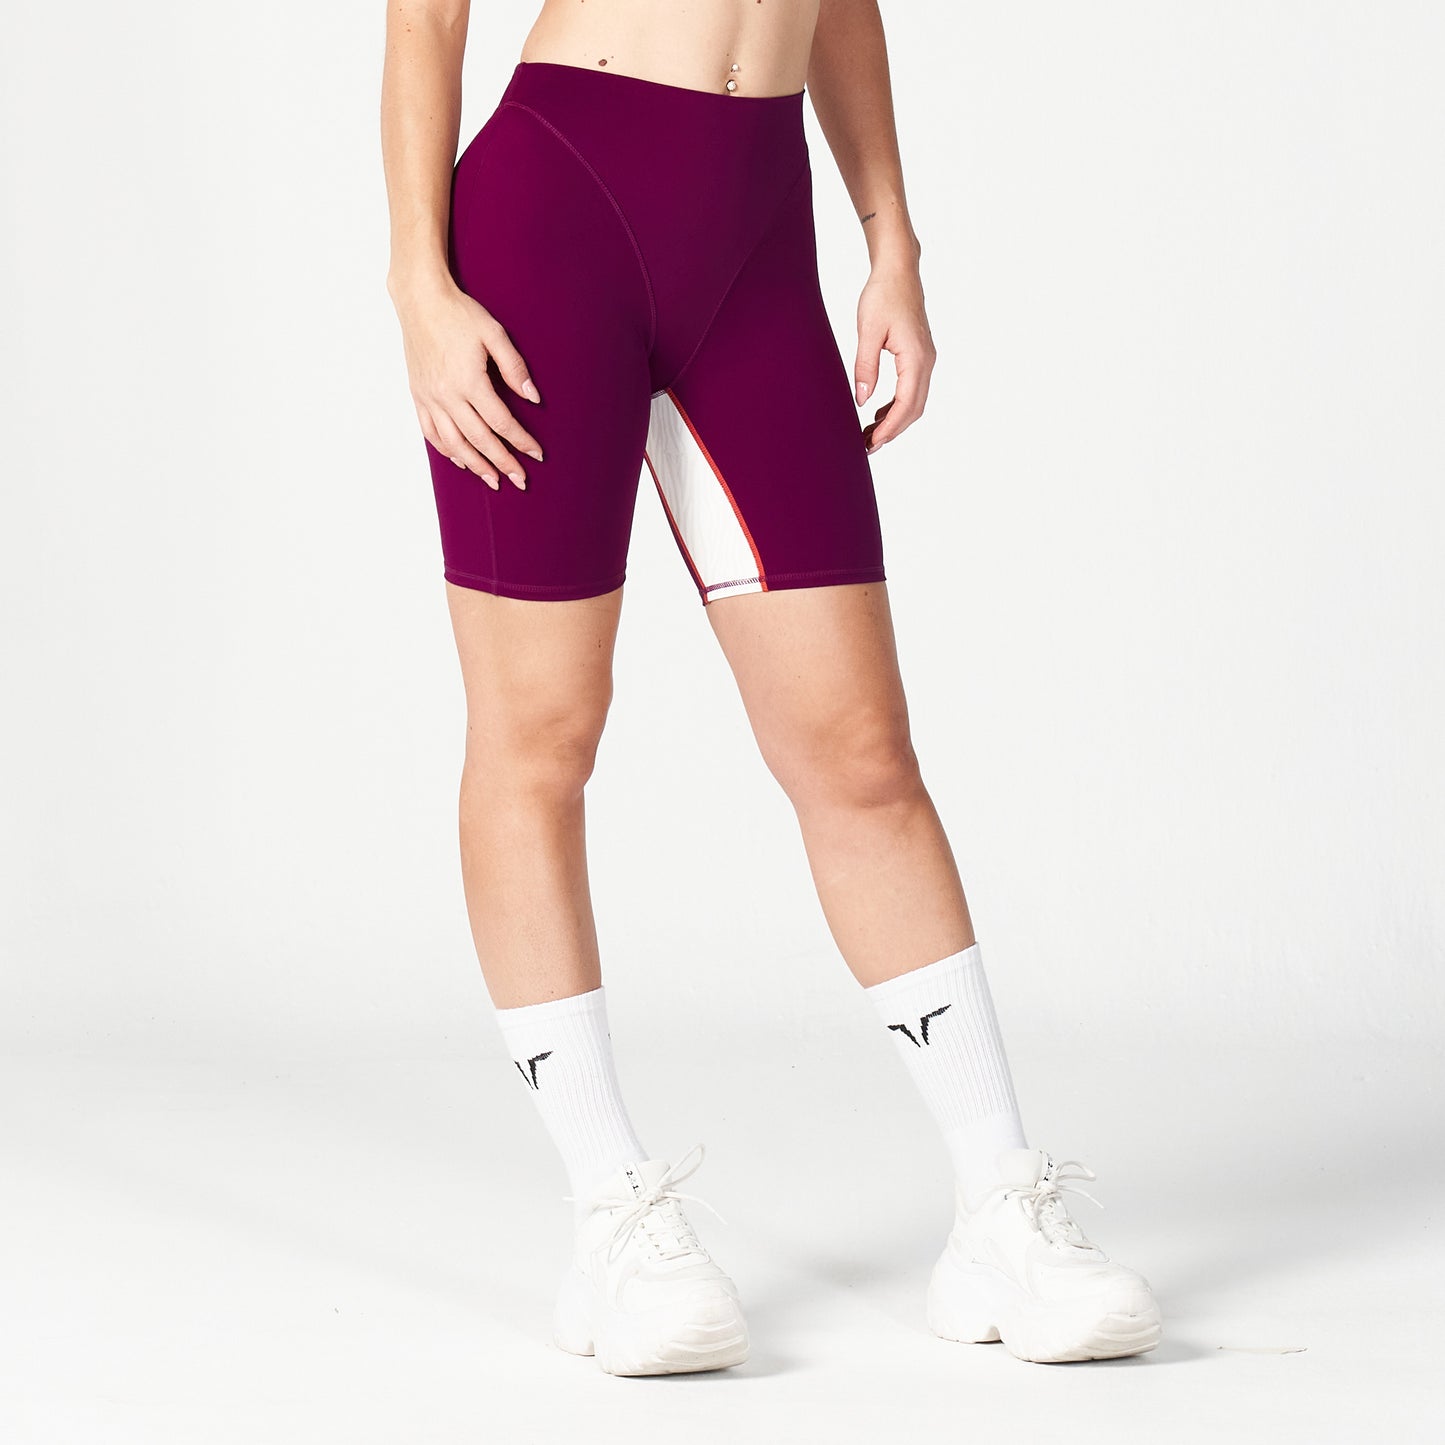 squatwolf-workout-clothes-core-v-purple-biker-shorts-dark-purple-gym-shorts-for-women